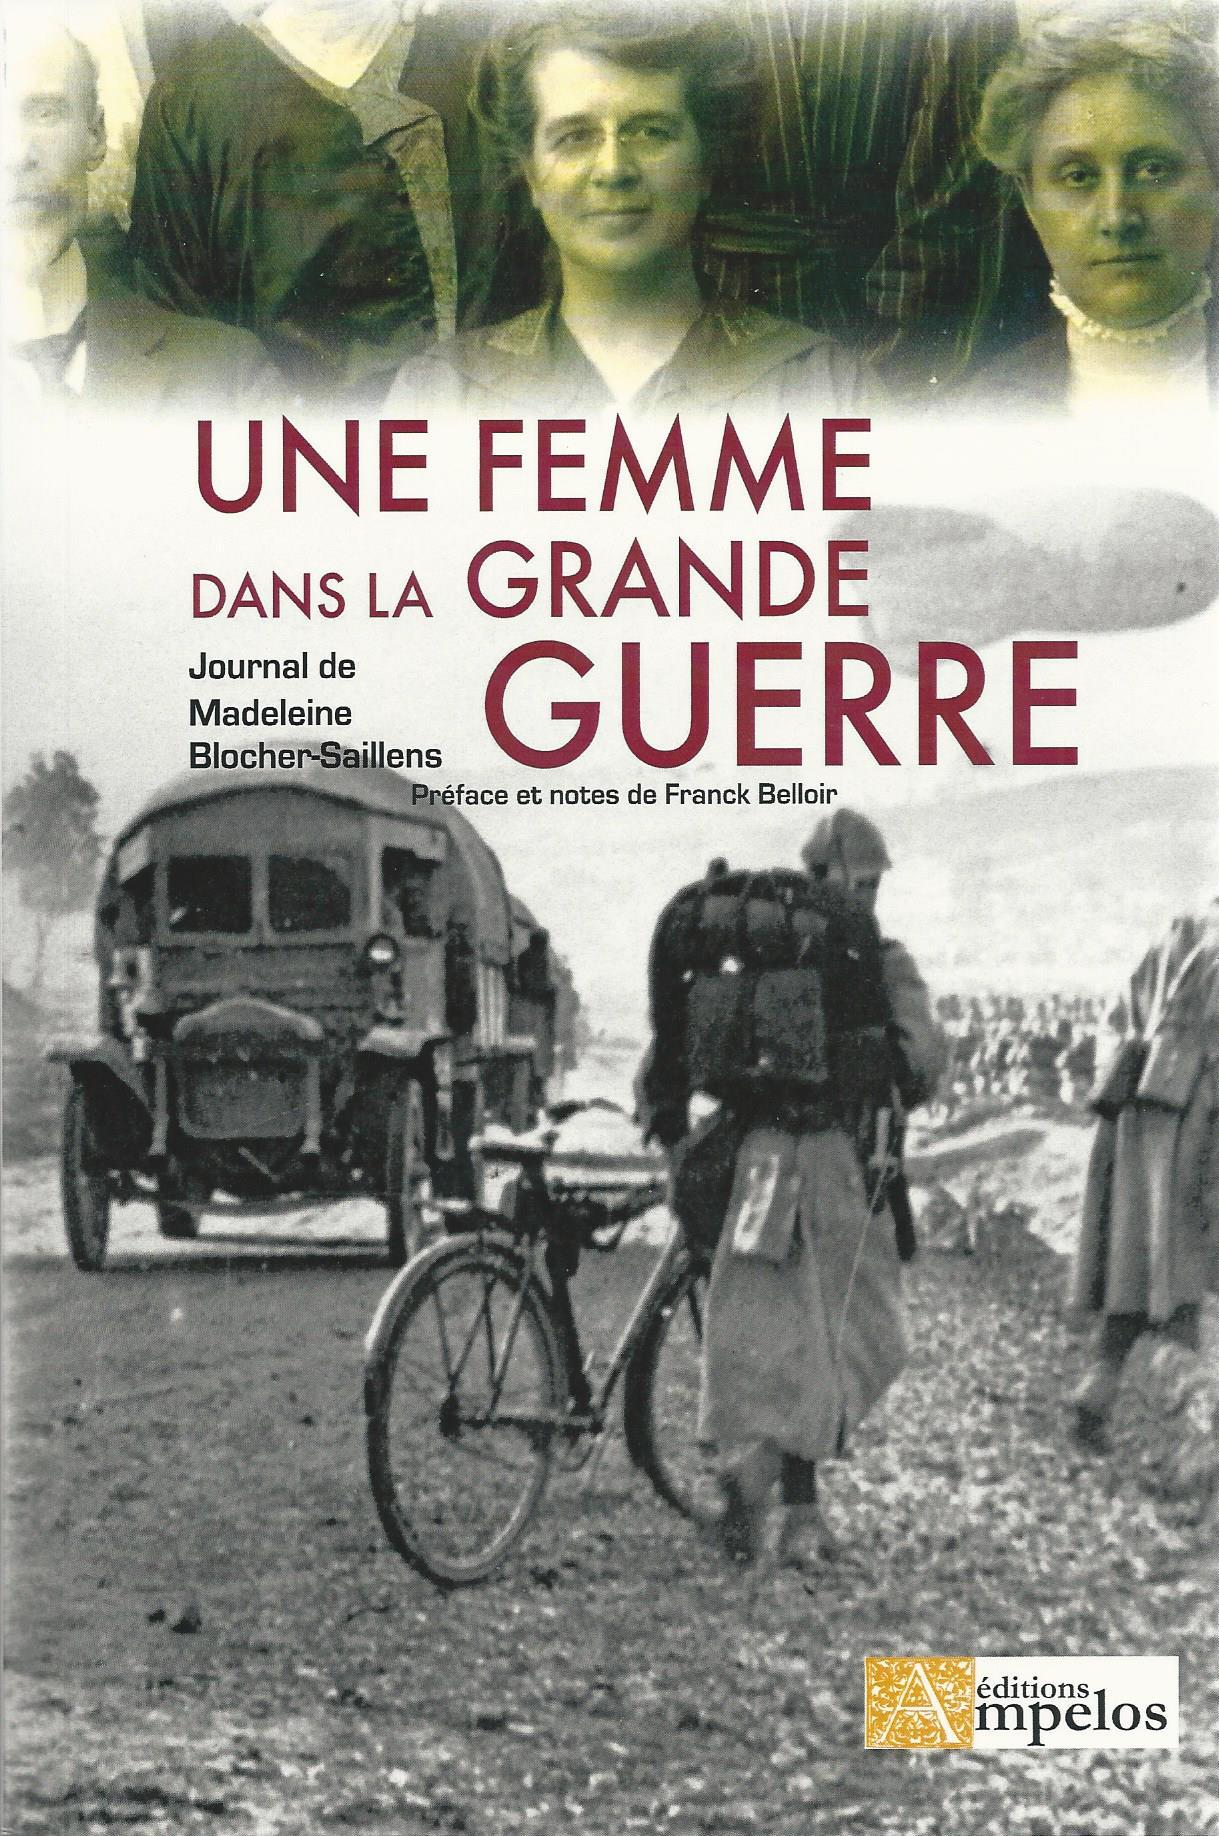 Une femme dans la grande guerre - Journal de Madeleine Blocher-Saillens